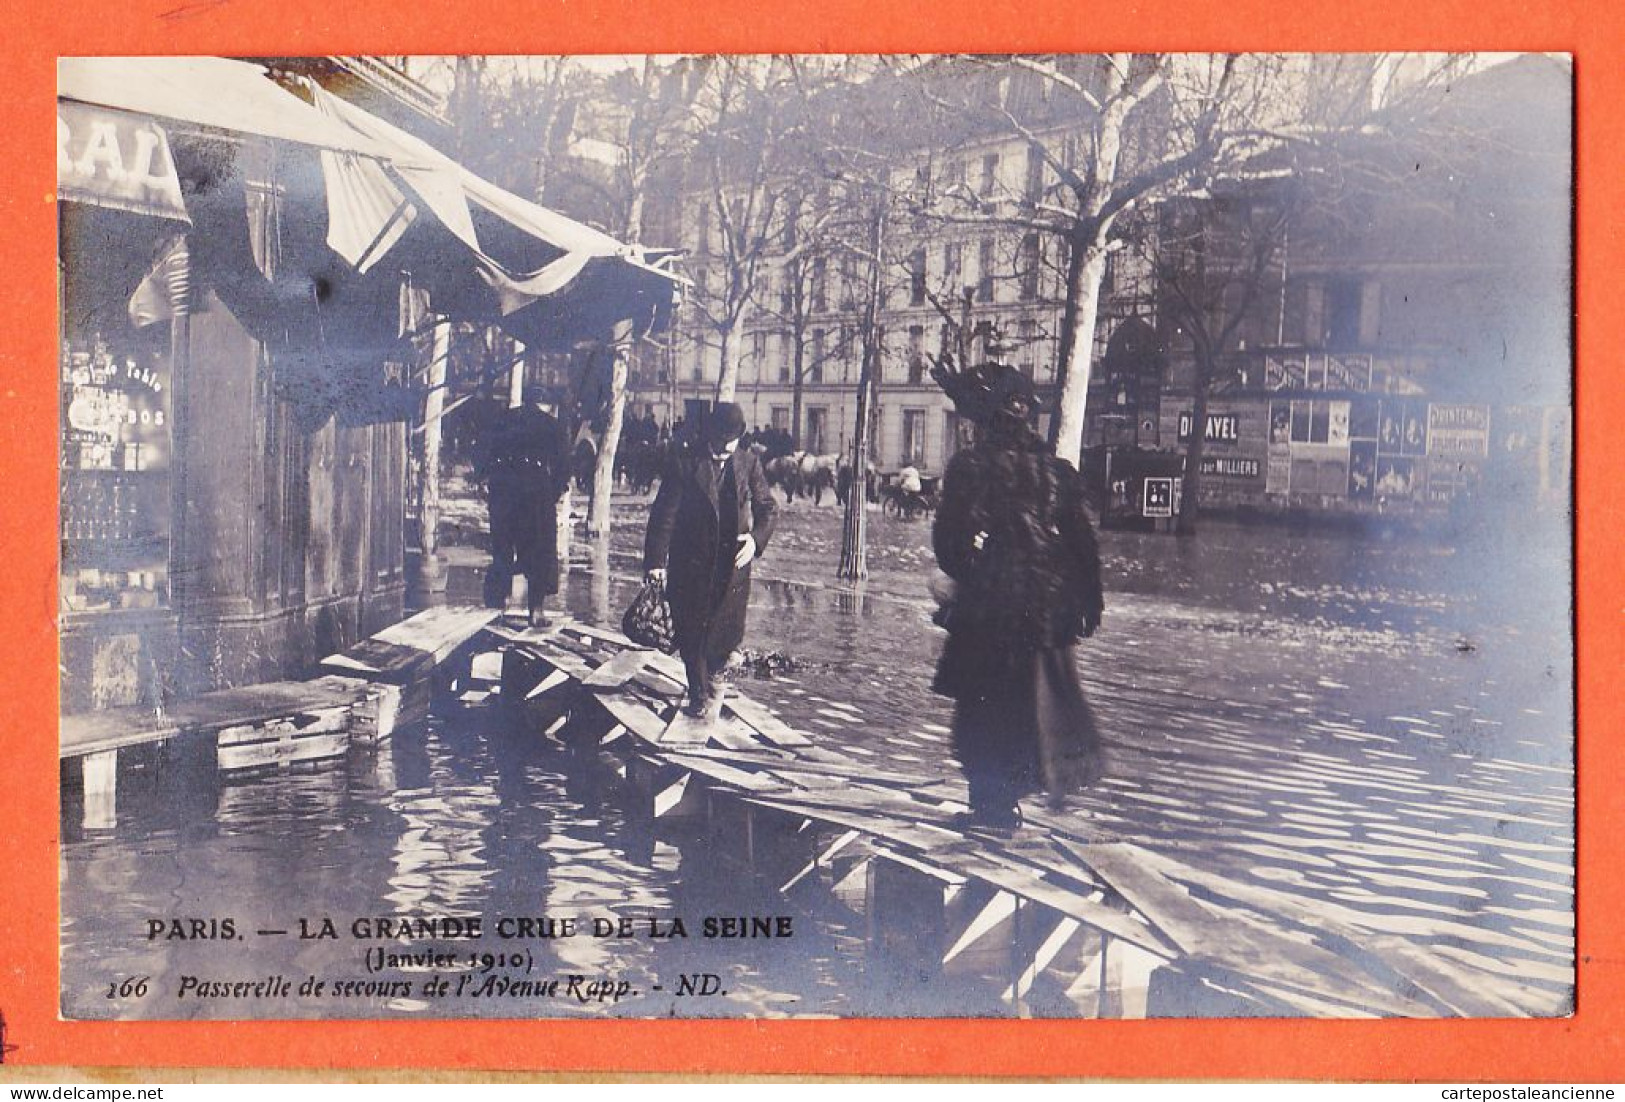 05136 / ⭐ ◉ PARIS VII ◉ Grande Crue SEINE Janvier 1910 ◉ Passerelle Secours Avenue RAPP ◉ Photo-Bromure NEURDEIN 287 - Inondations De 1910